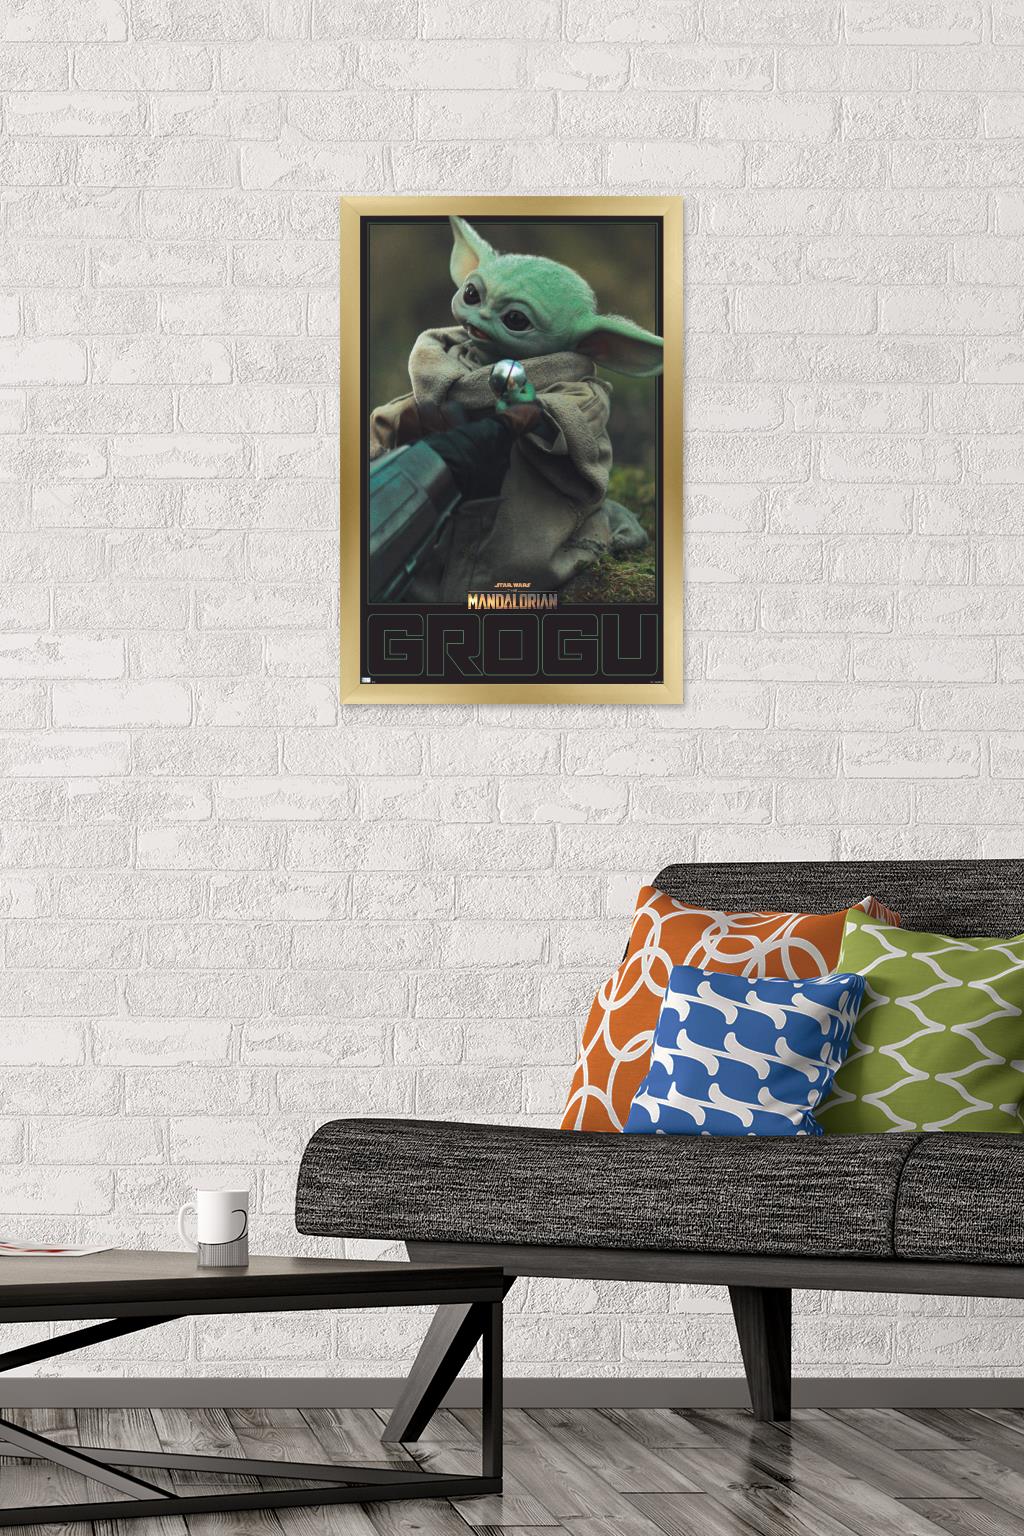 Star Wars The Mandalorian Season 2 - Grogu Wall Poster, 14.725" x 22.375", Framed - image 2 of 5